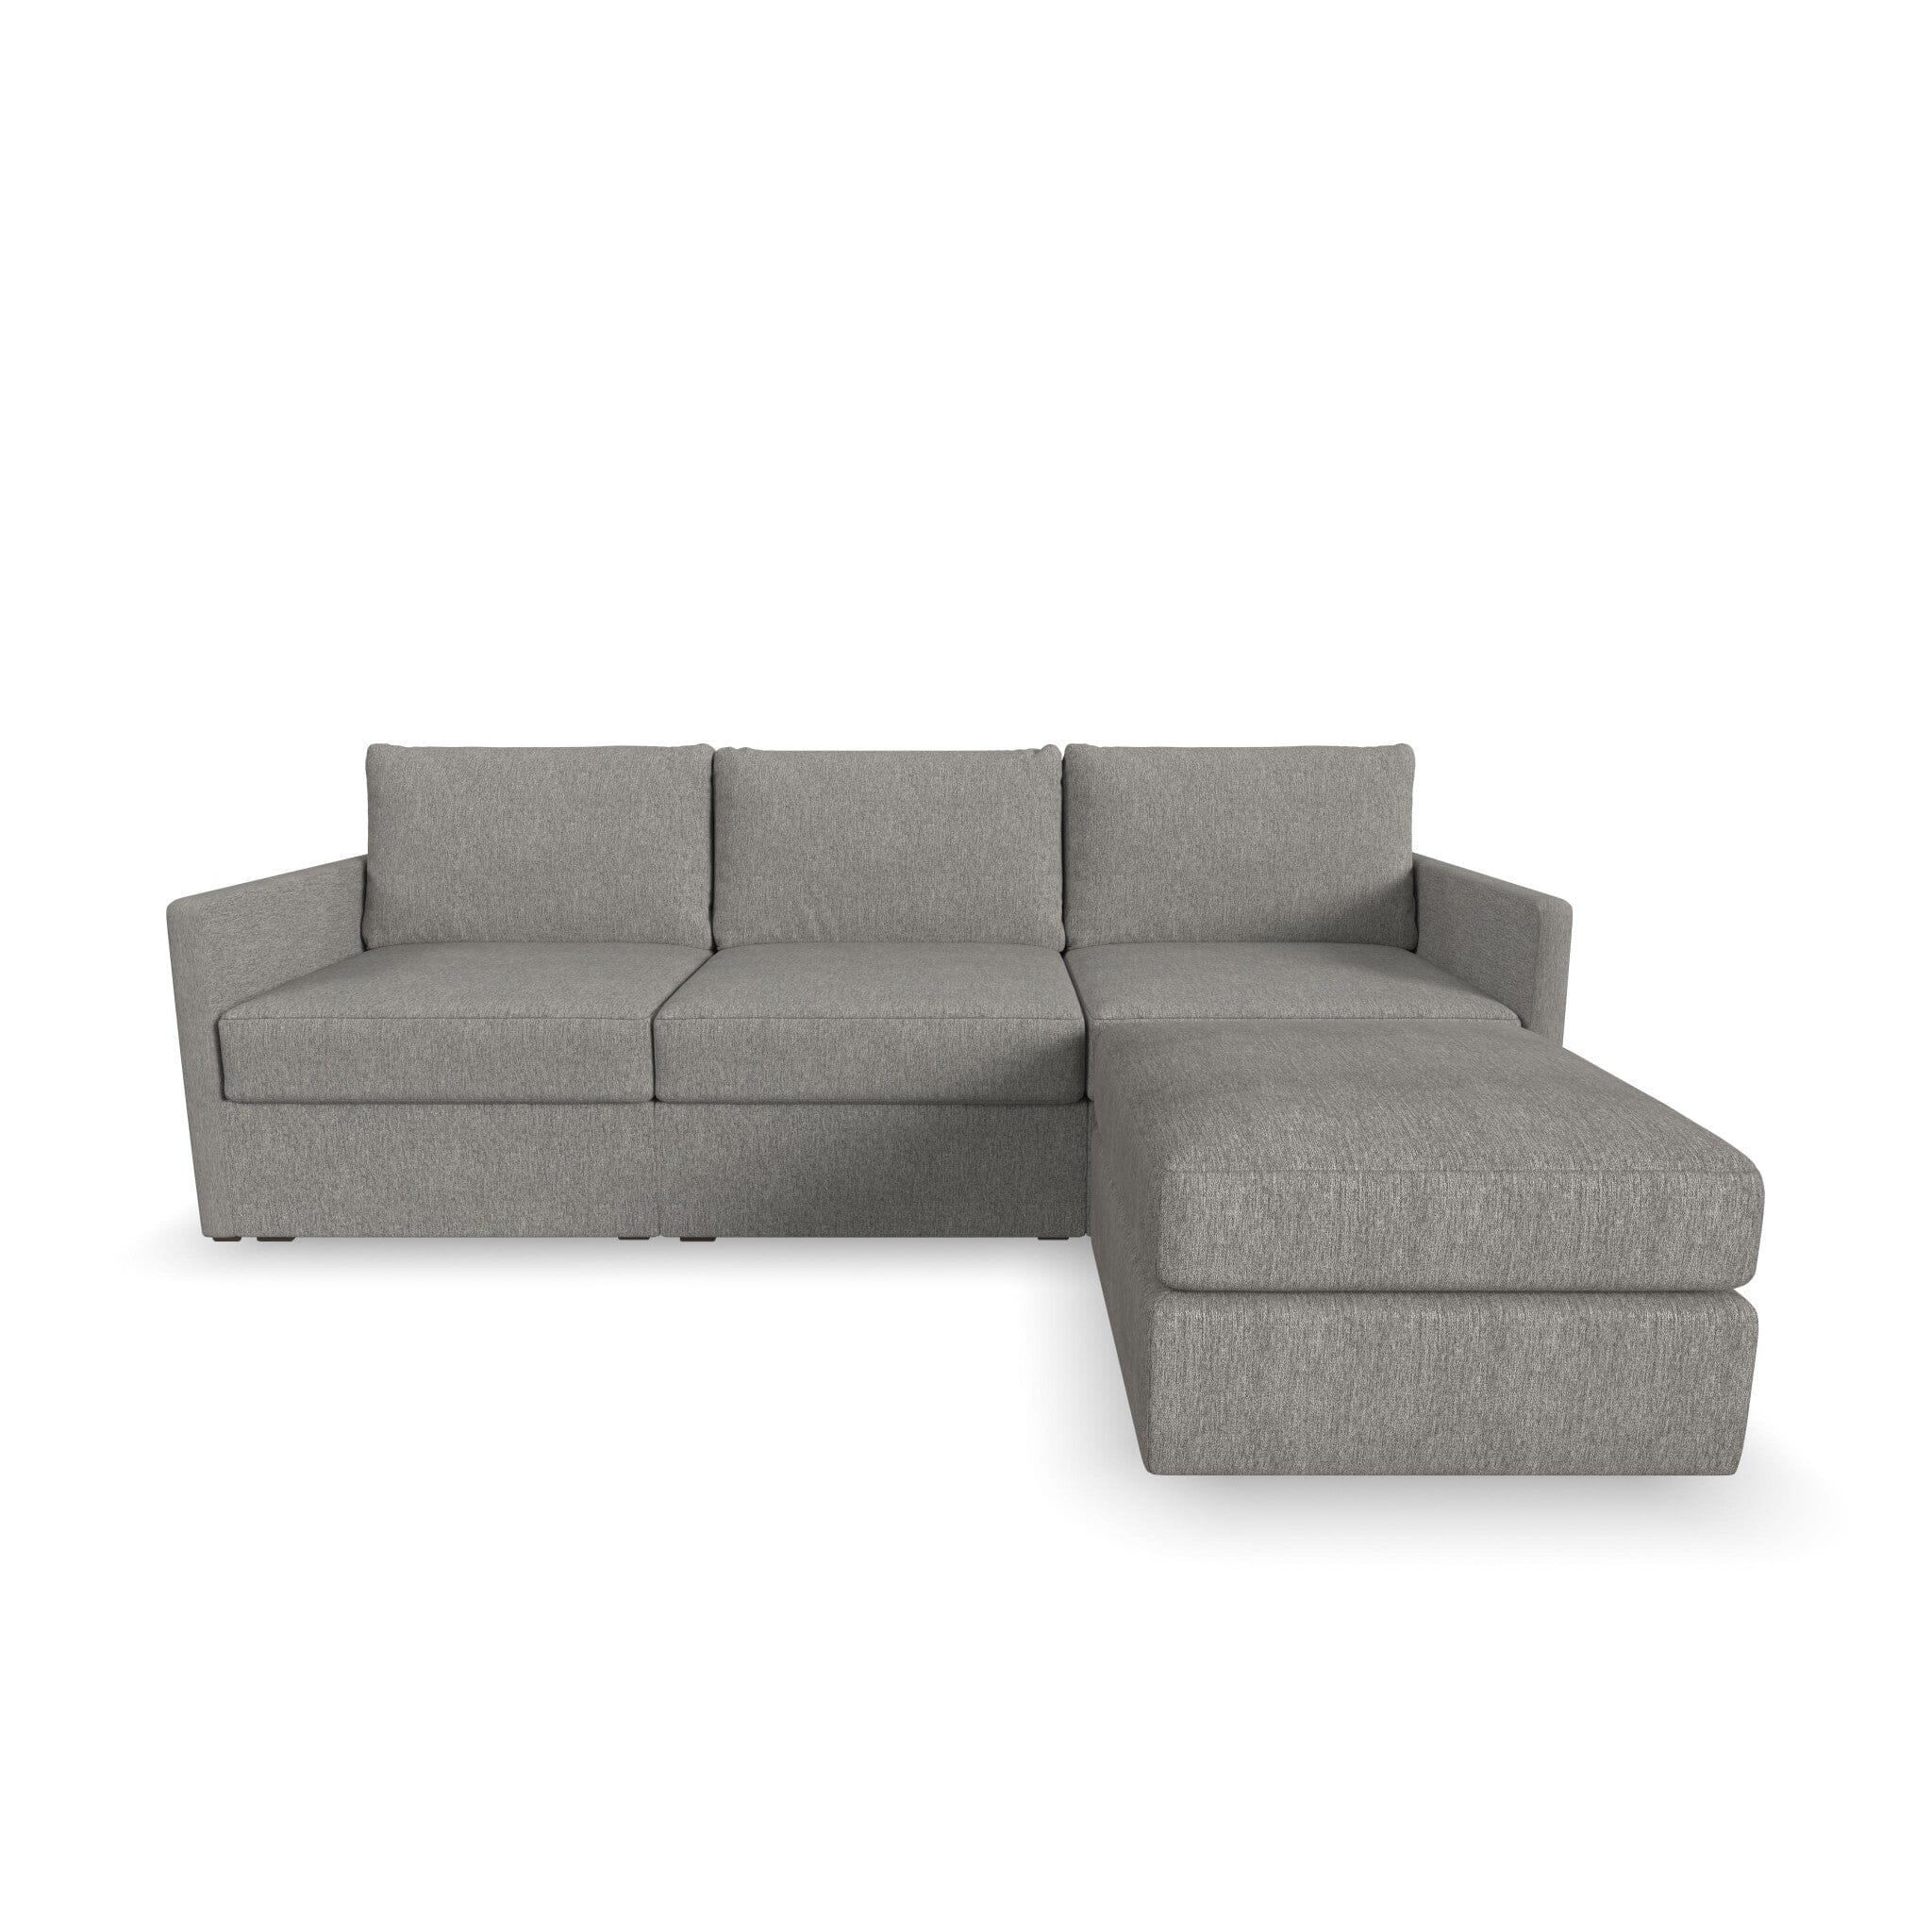 Traditional Sofa with Narrow Arm and Ottoman By Flex Sofa Flex